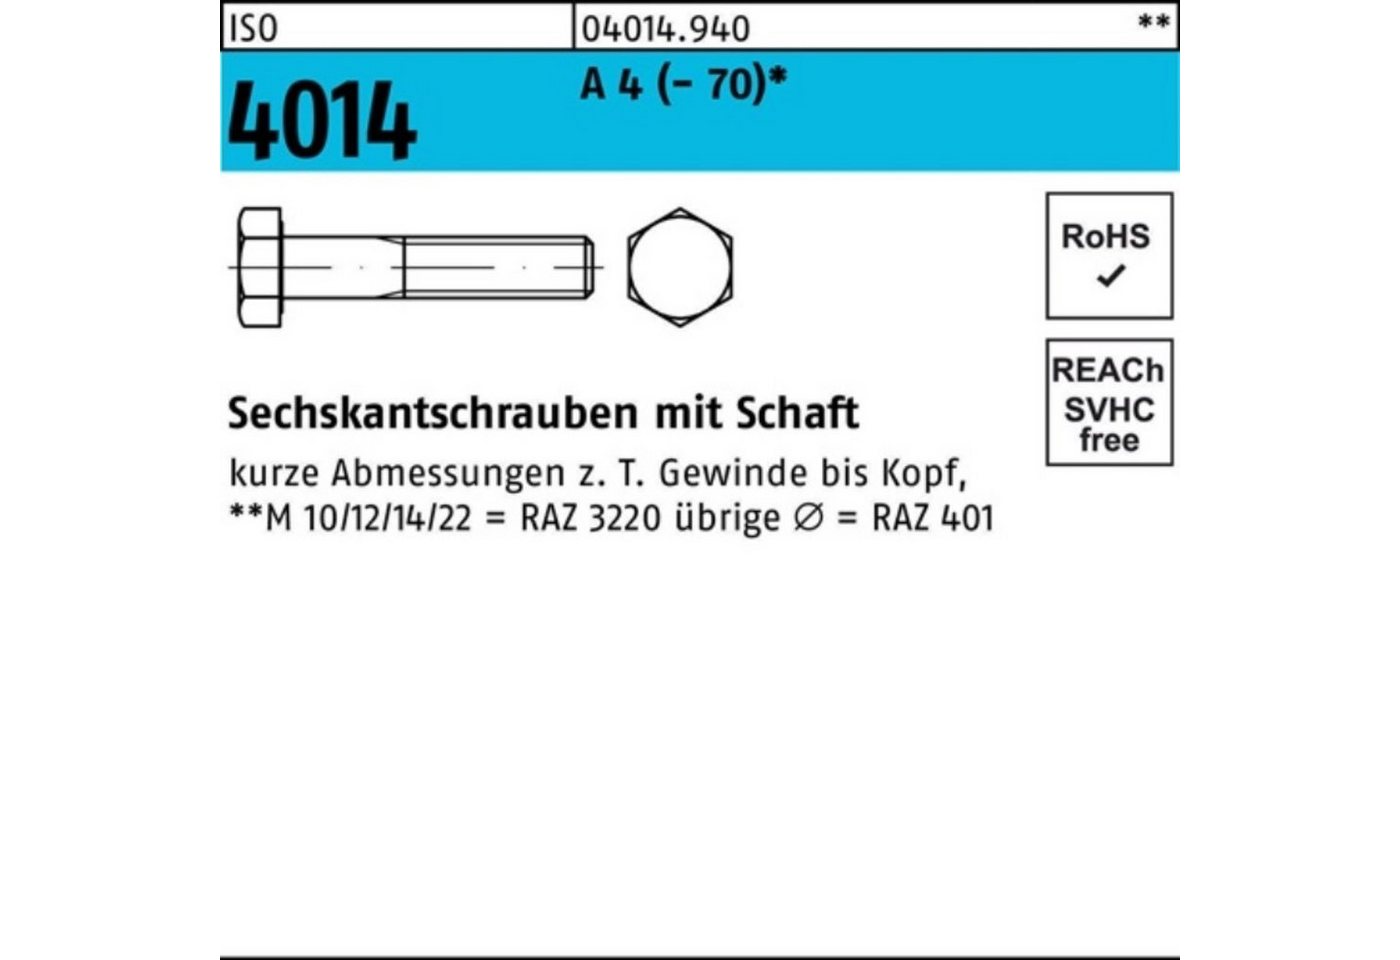 Bufab Sechskantschraube 100er Pack Sechskantschraube ISO 4014 Schaft M16x 65 A 4 (70) 50 St von Bufab